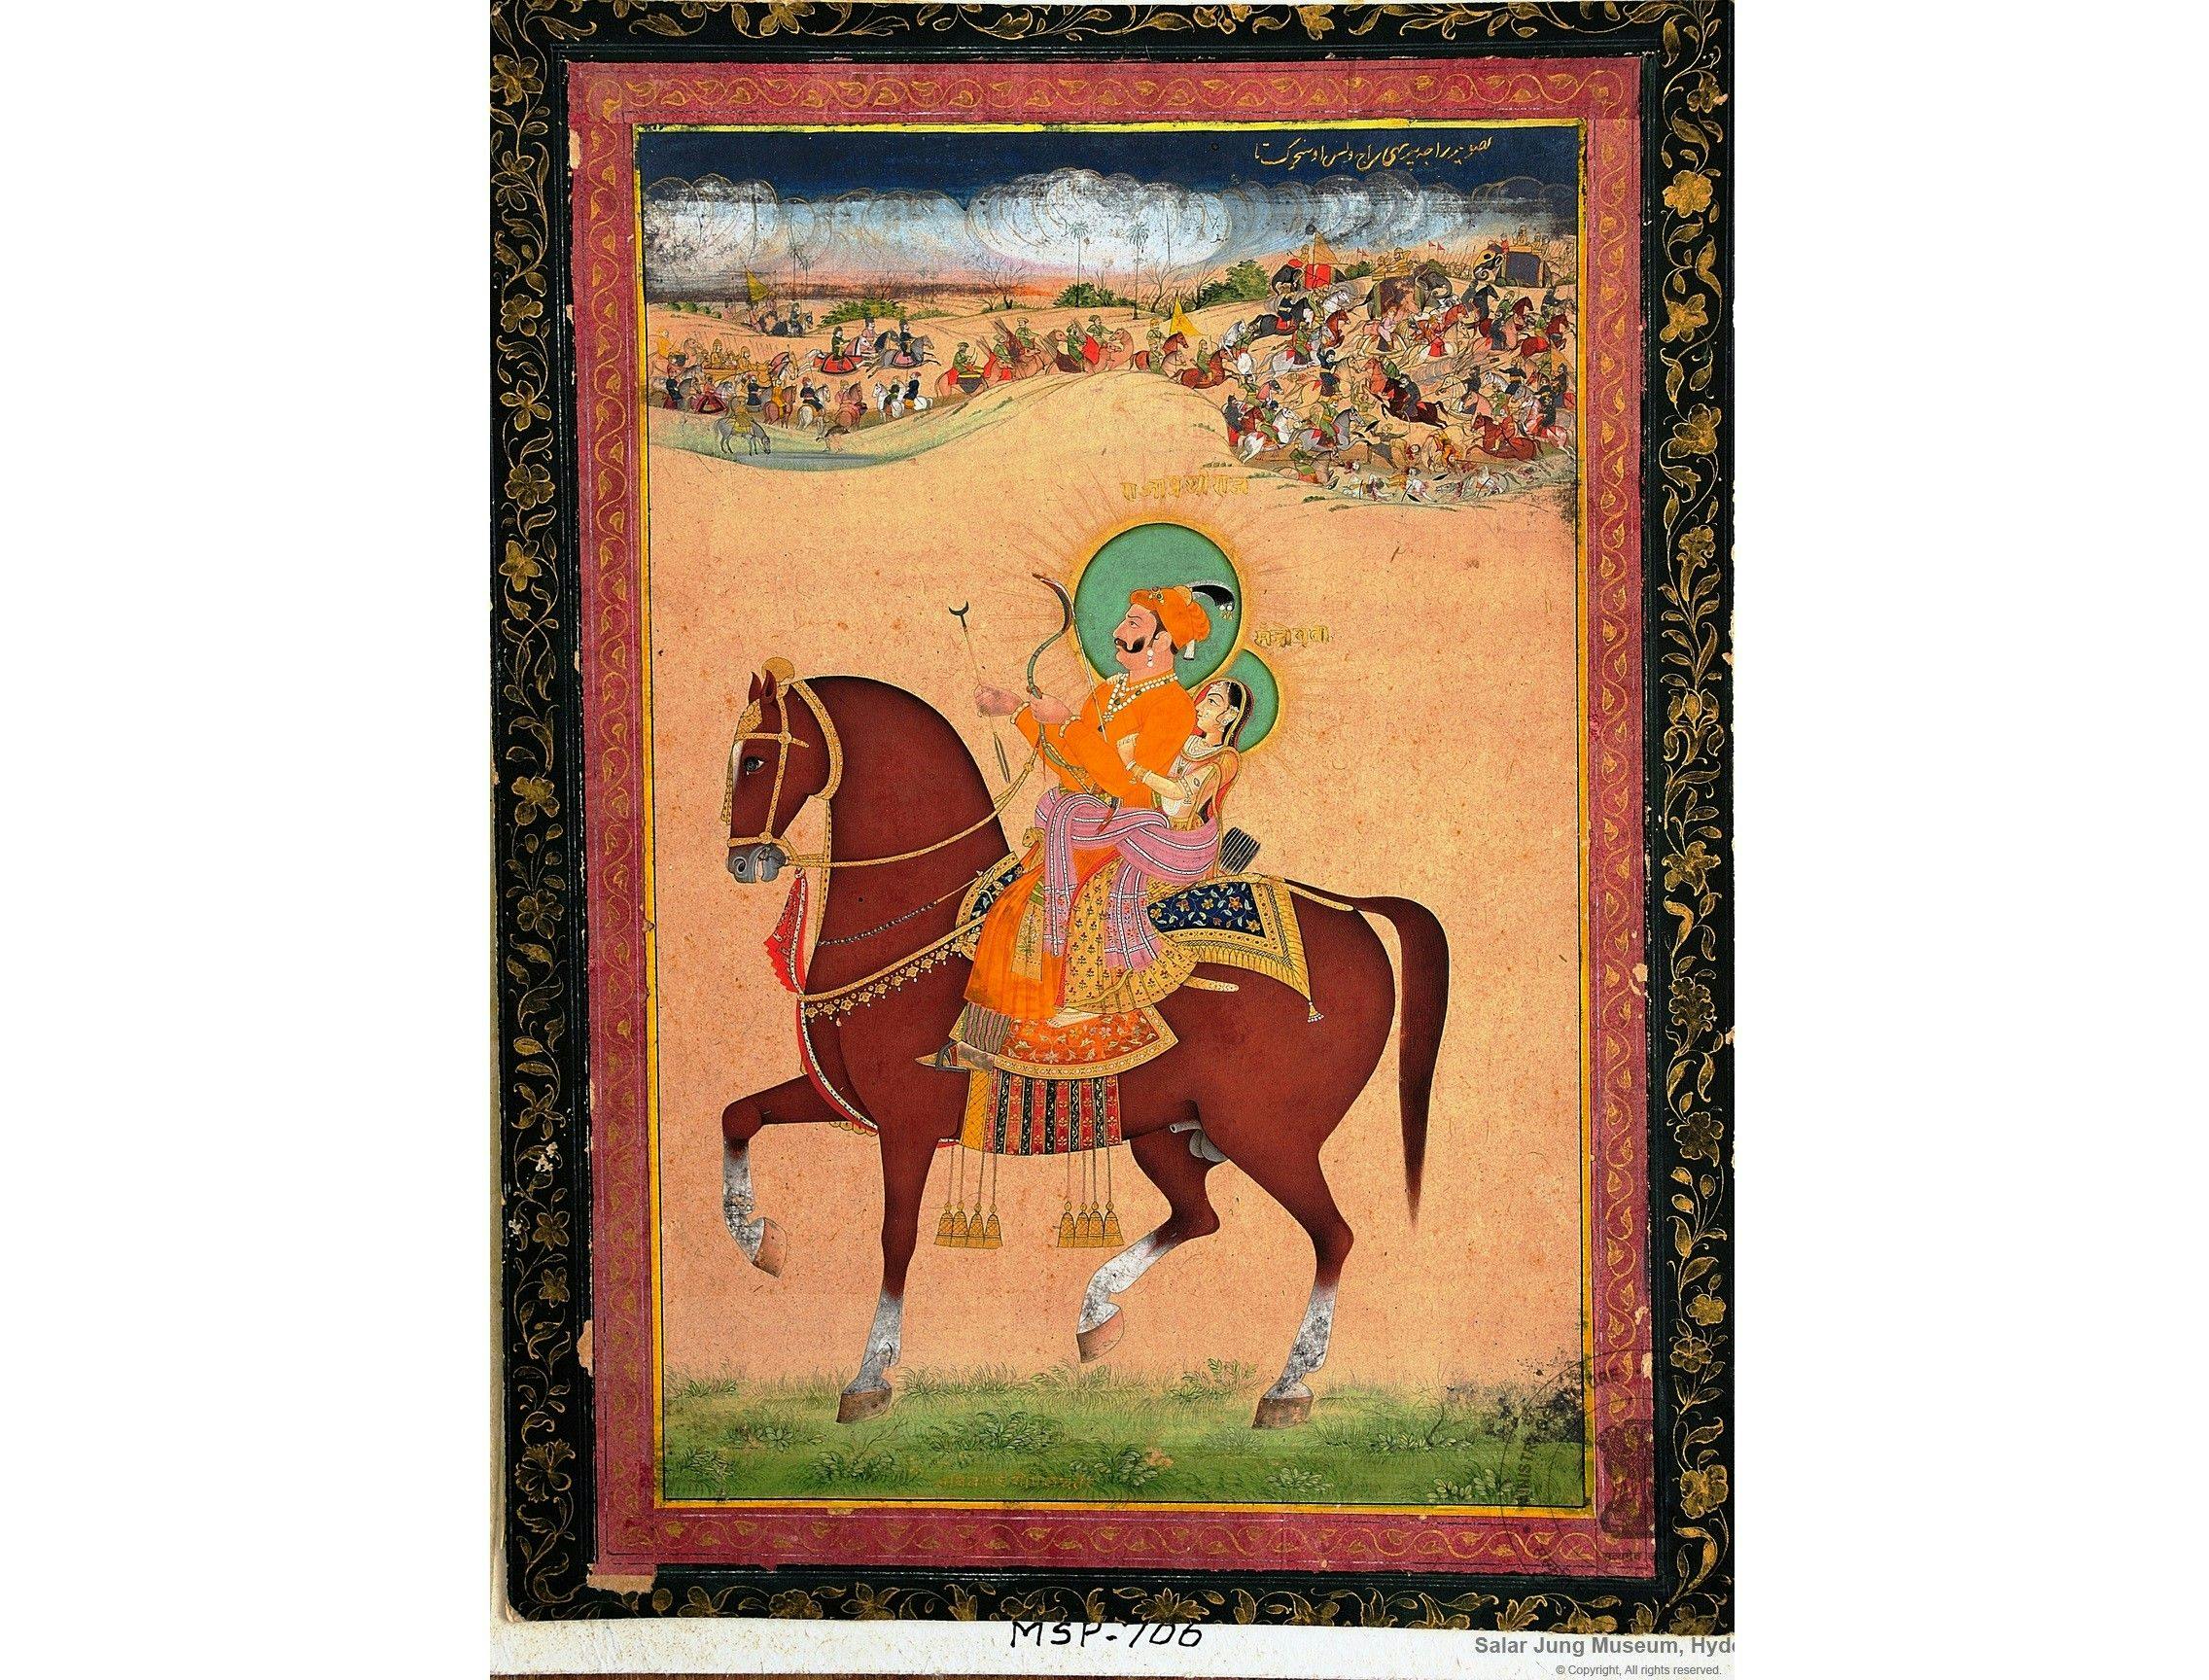 Prithviraj and Sanyogita, riding on a horse